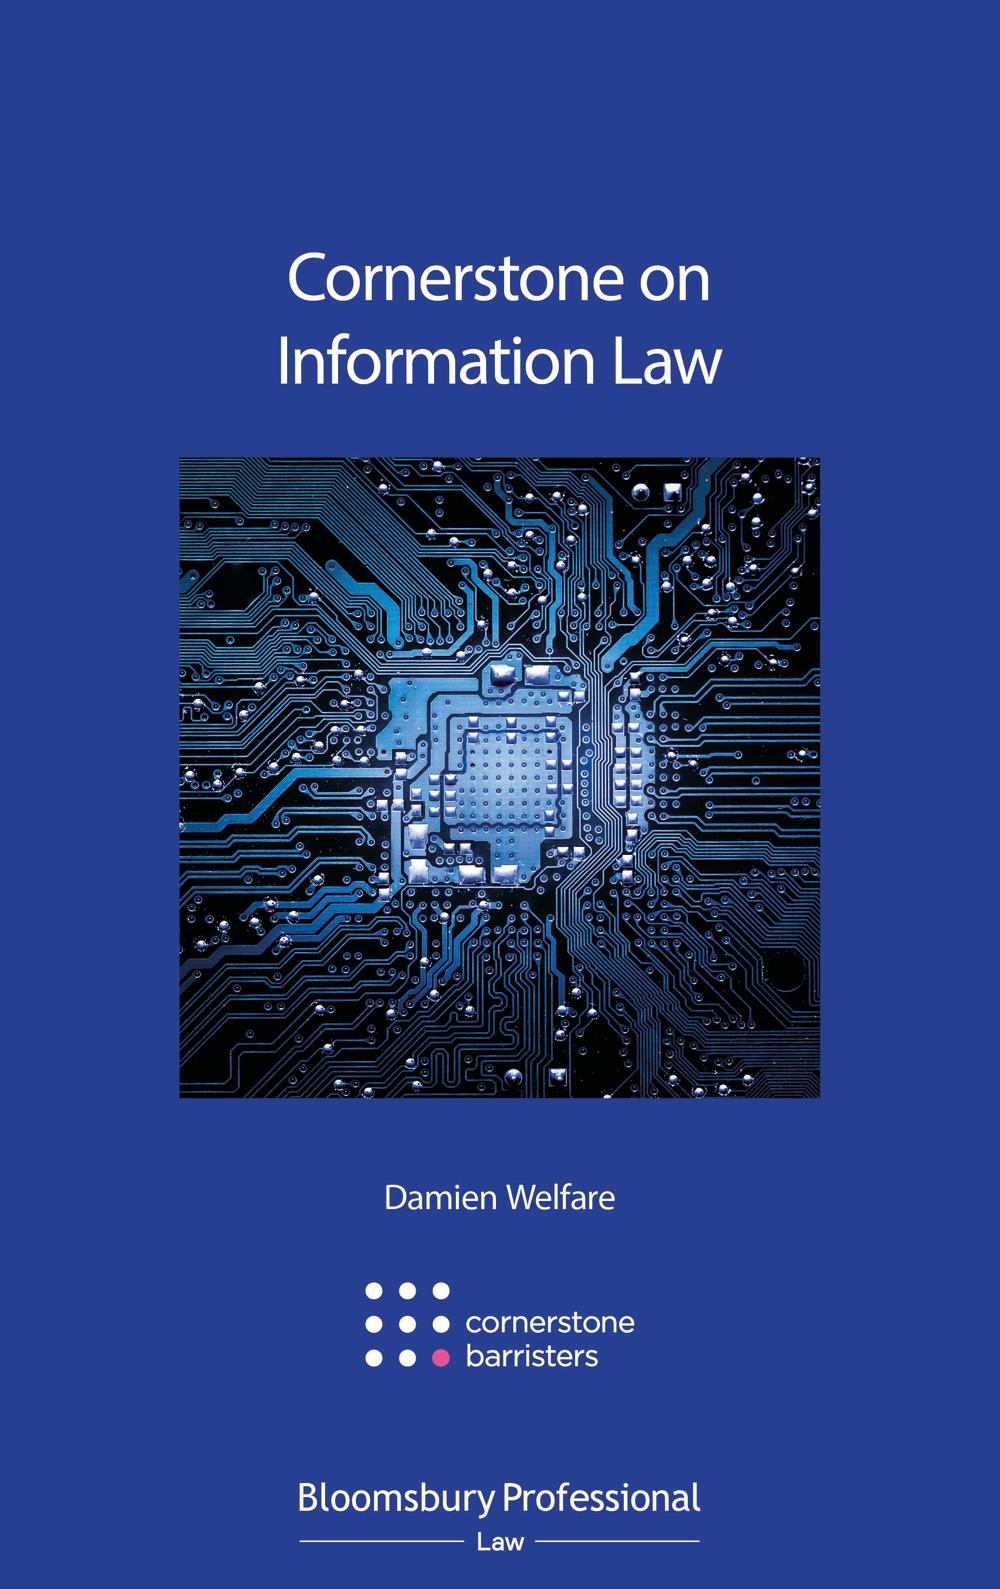 Cornerstone on Information Law - Damien Welfare